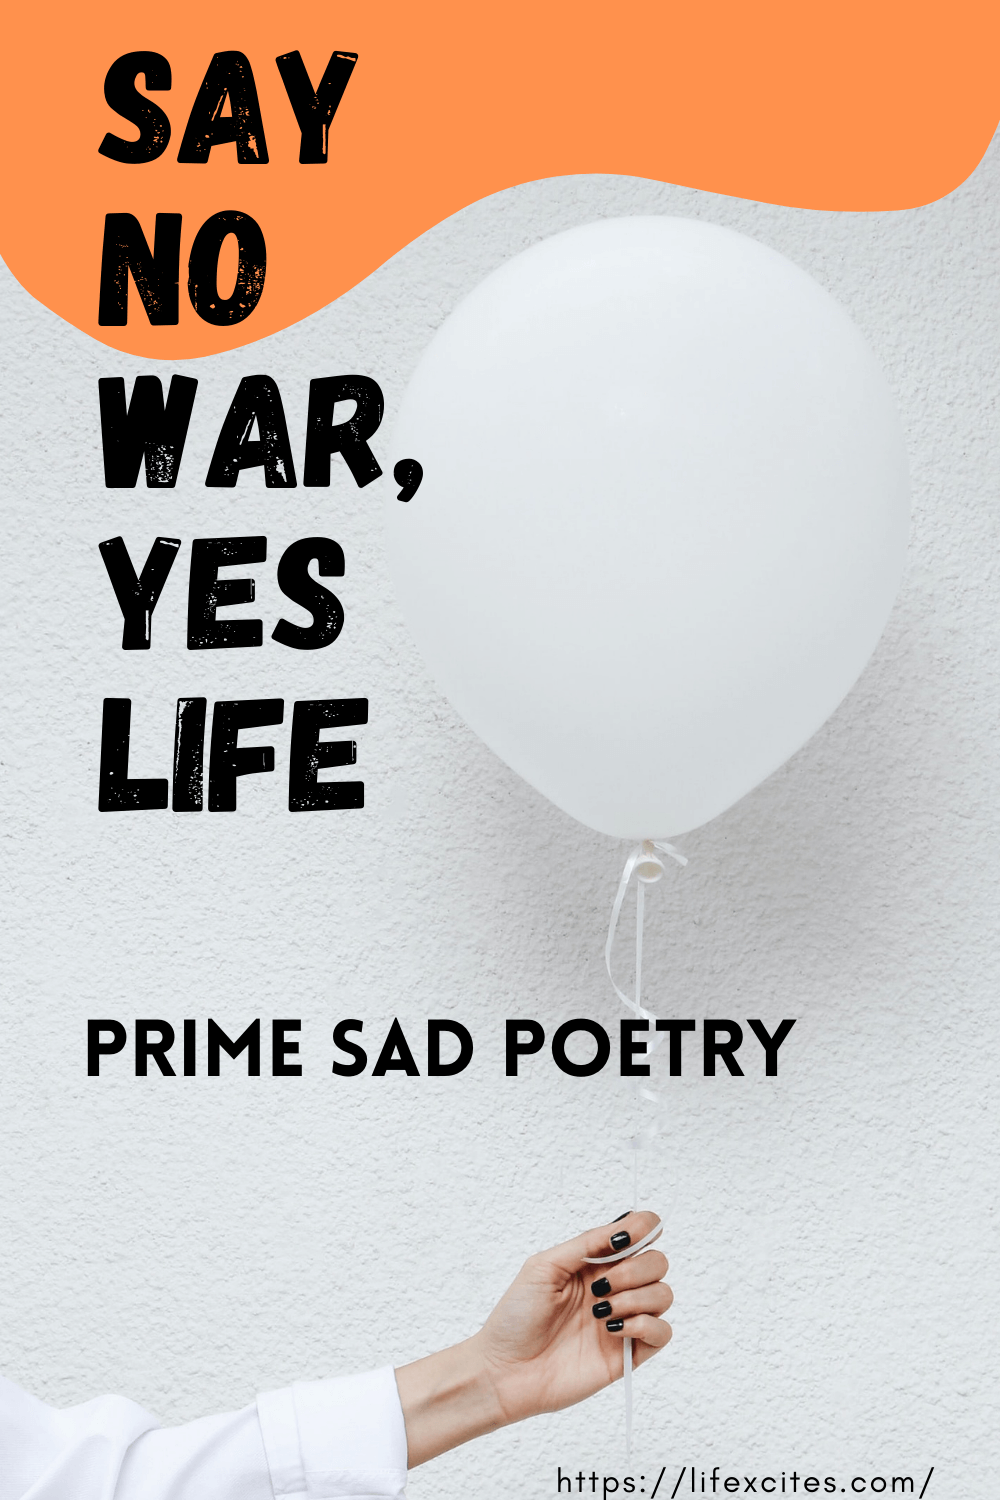 Prime Sad Poetry